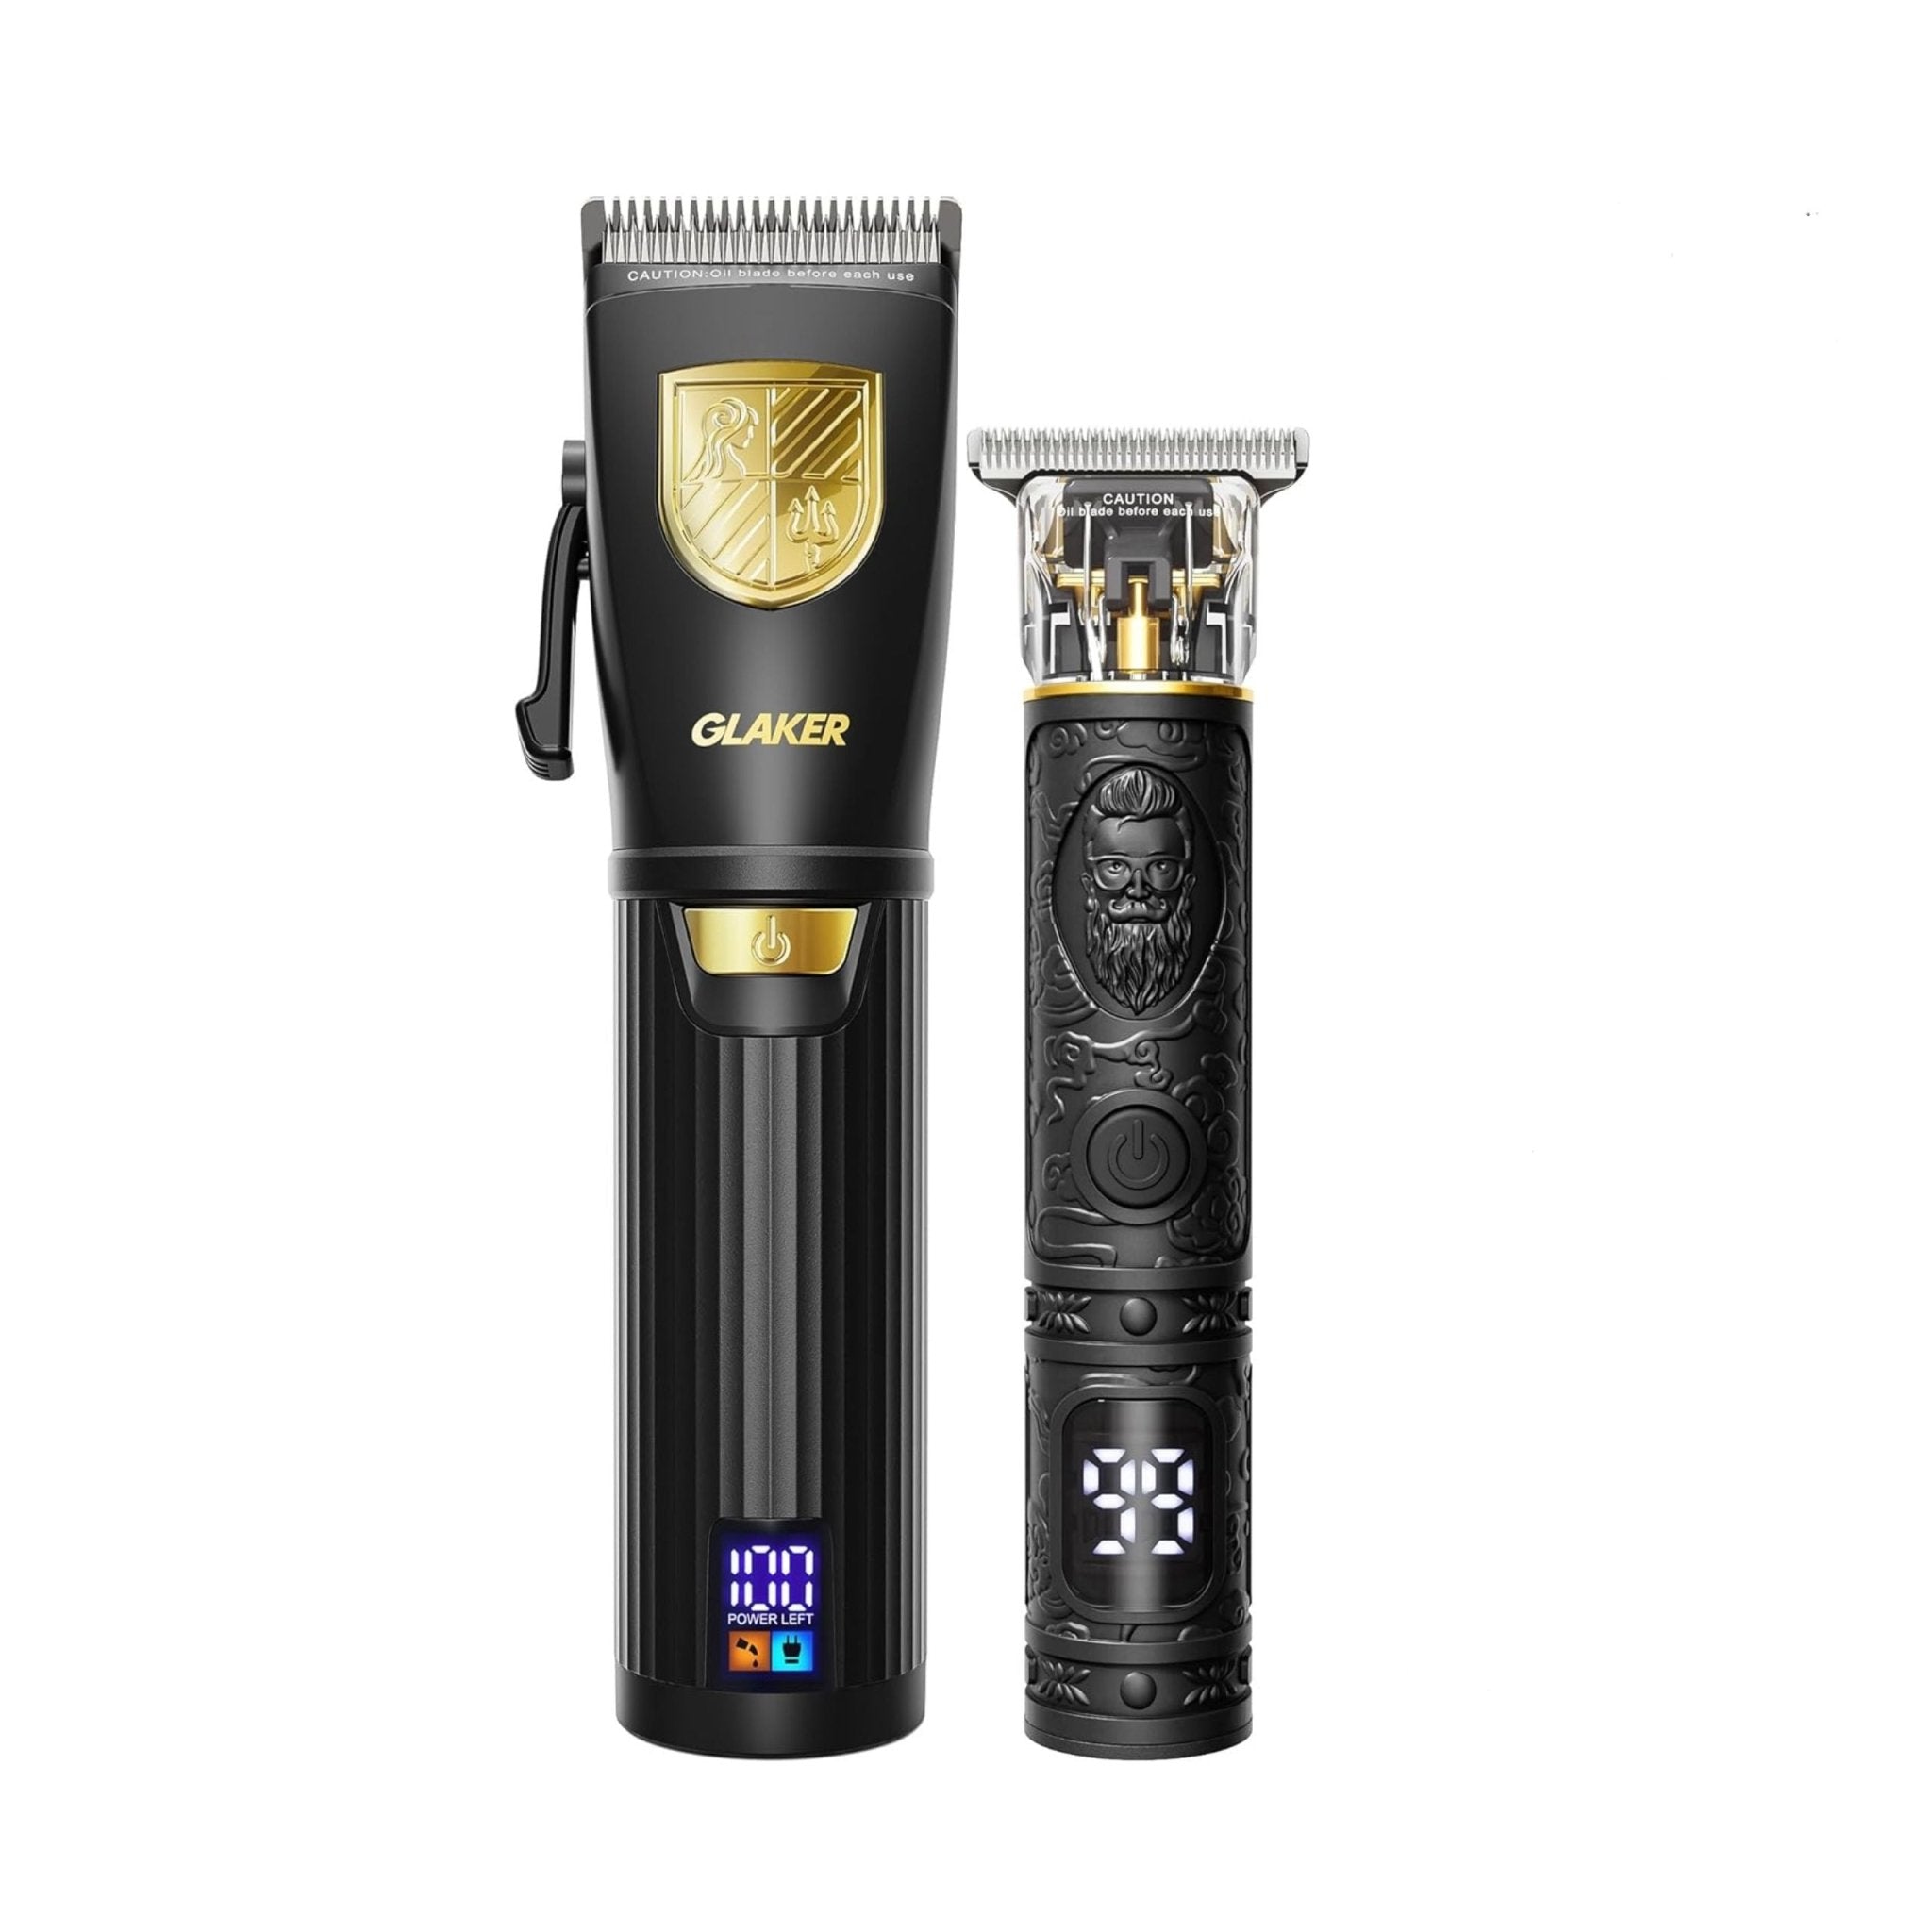 Glaker Professional Hair Clipper and Outline Trimmer Kit 2 - Black Gold